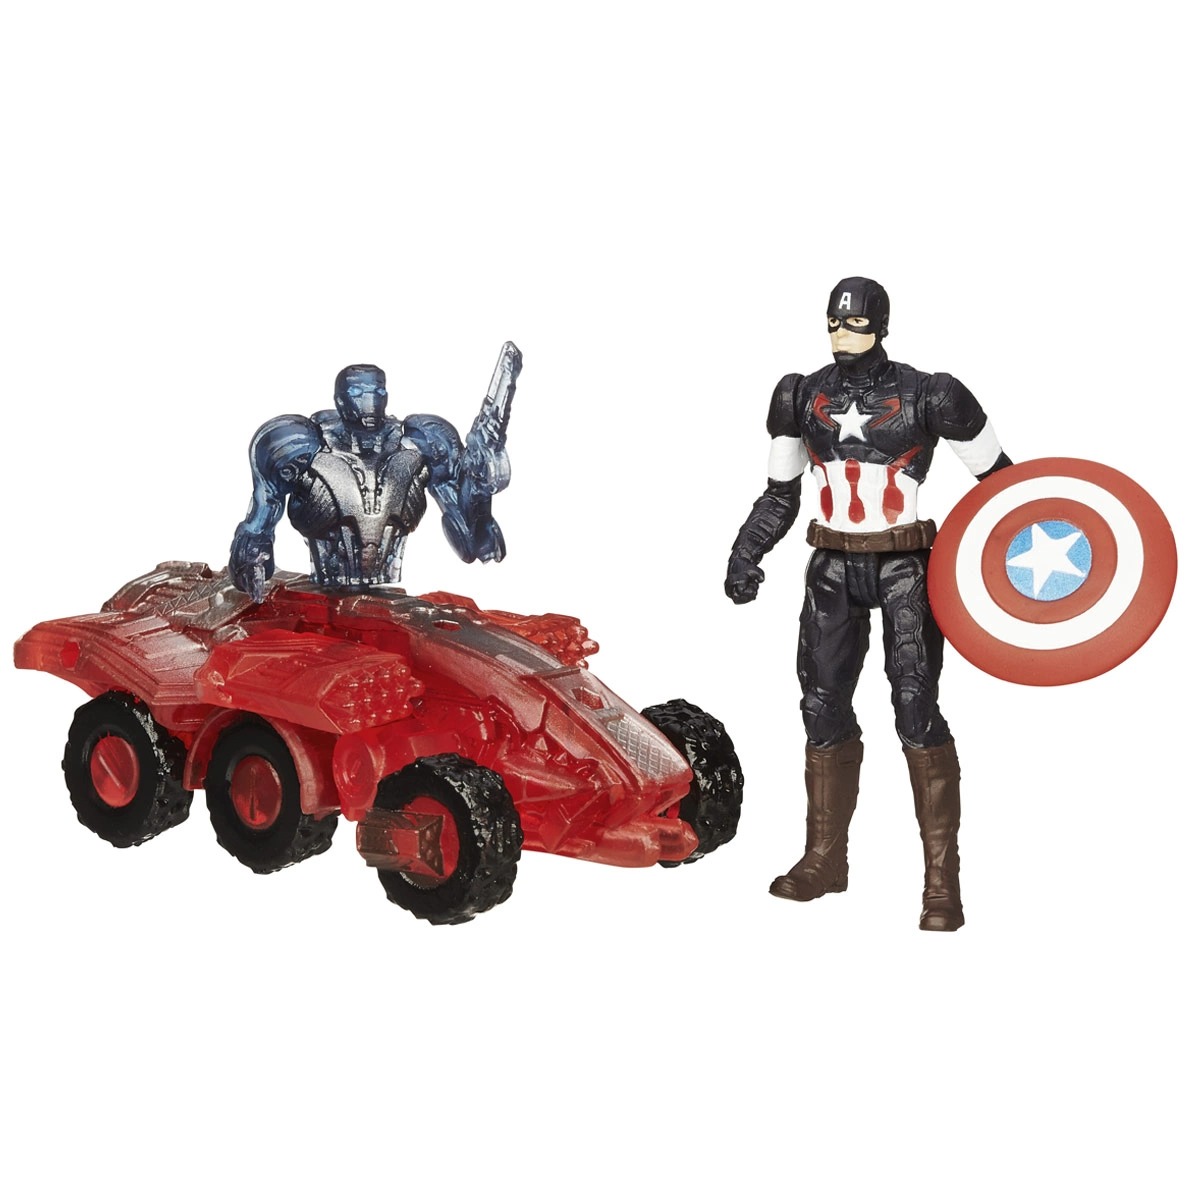 Мини-фигурка Avengers Captain America, с аксессуарами